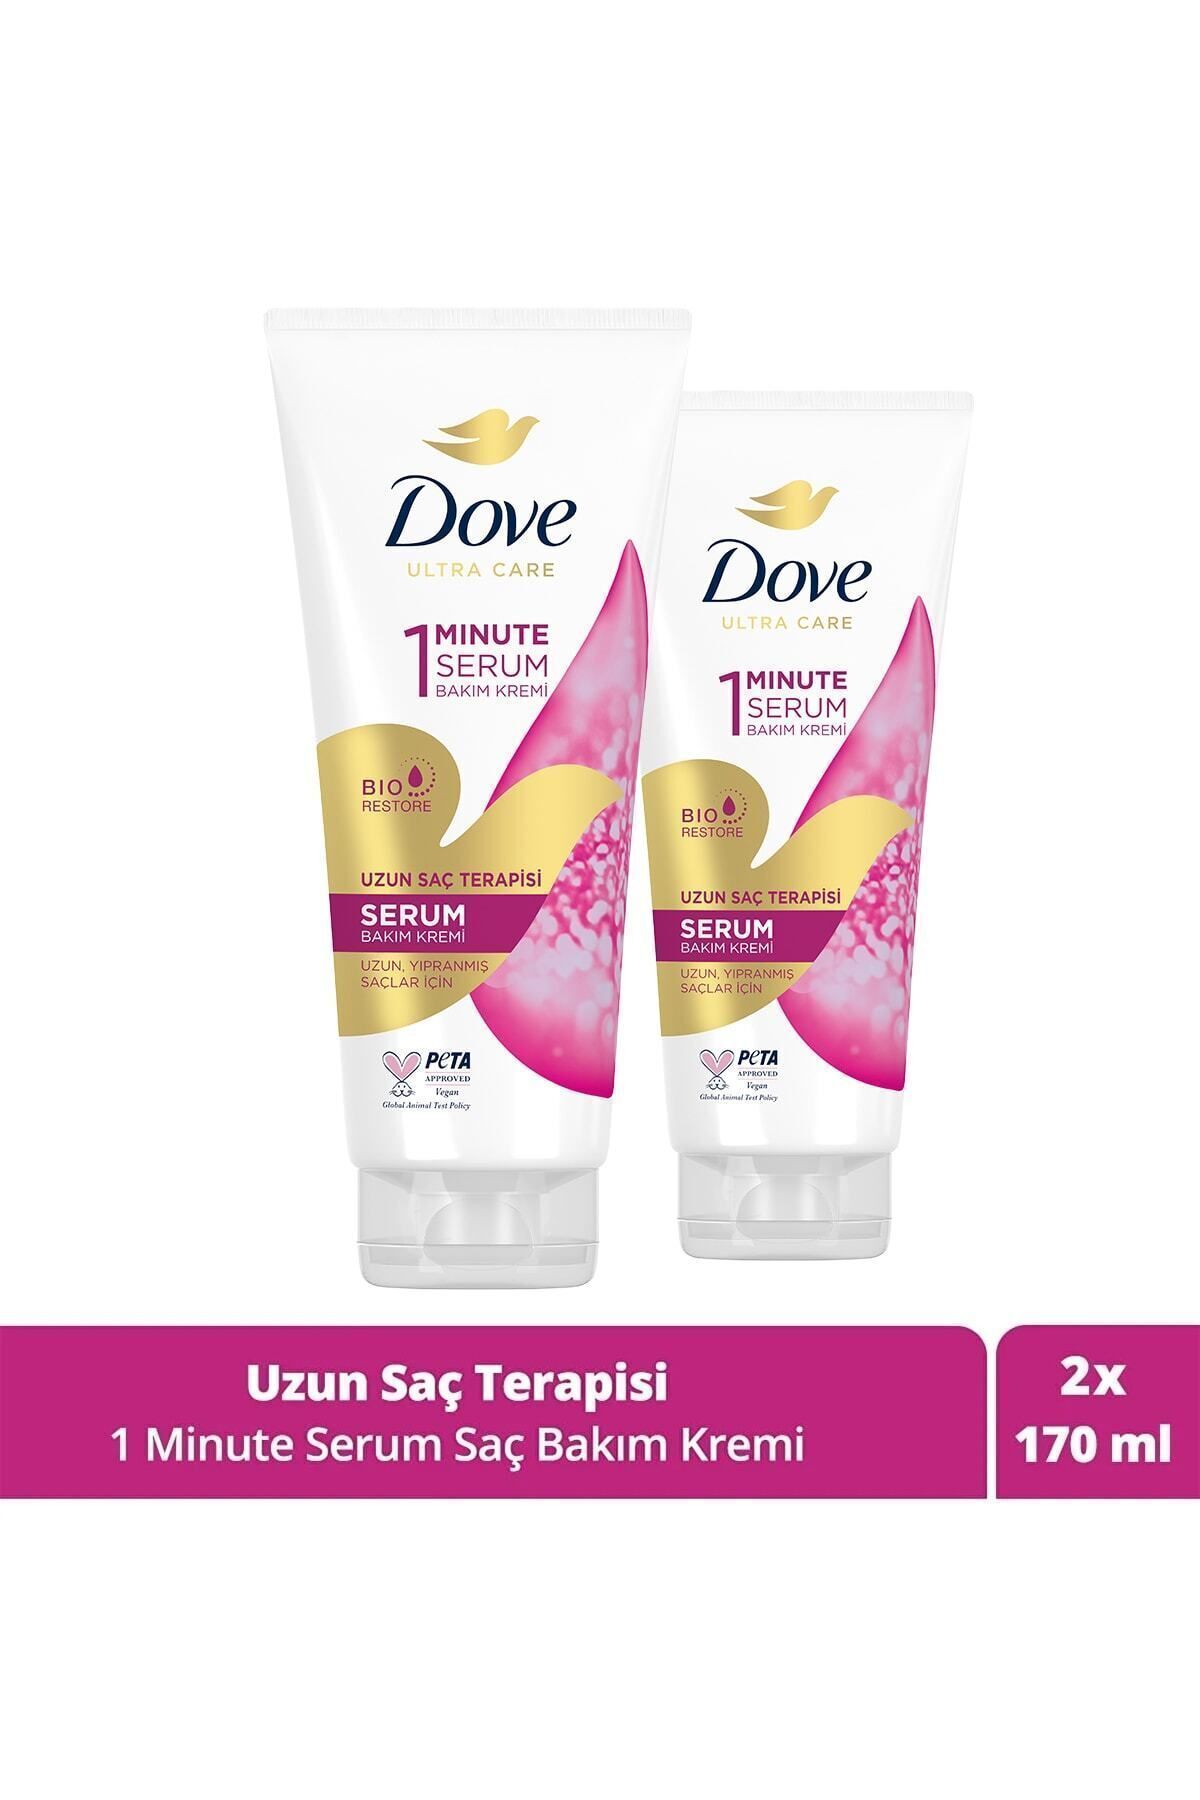 Dove Ultra Care 1 Minute Serum Saç Bakım Kremi Uzun Saç Terapisi 170 ml X2